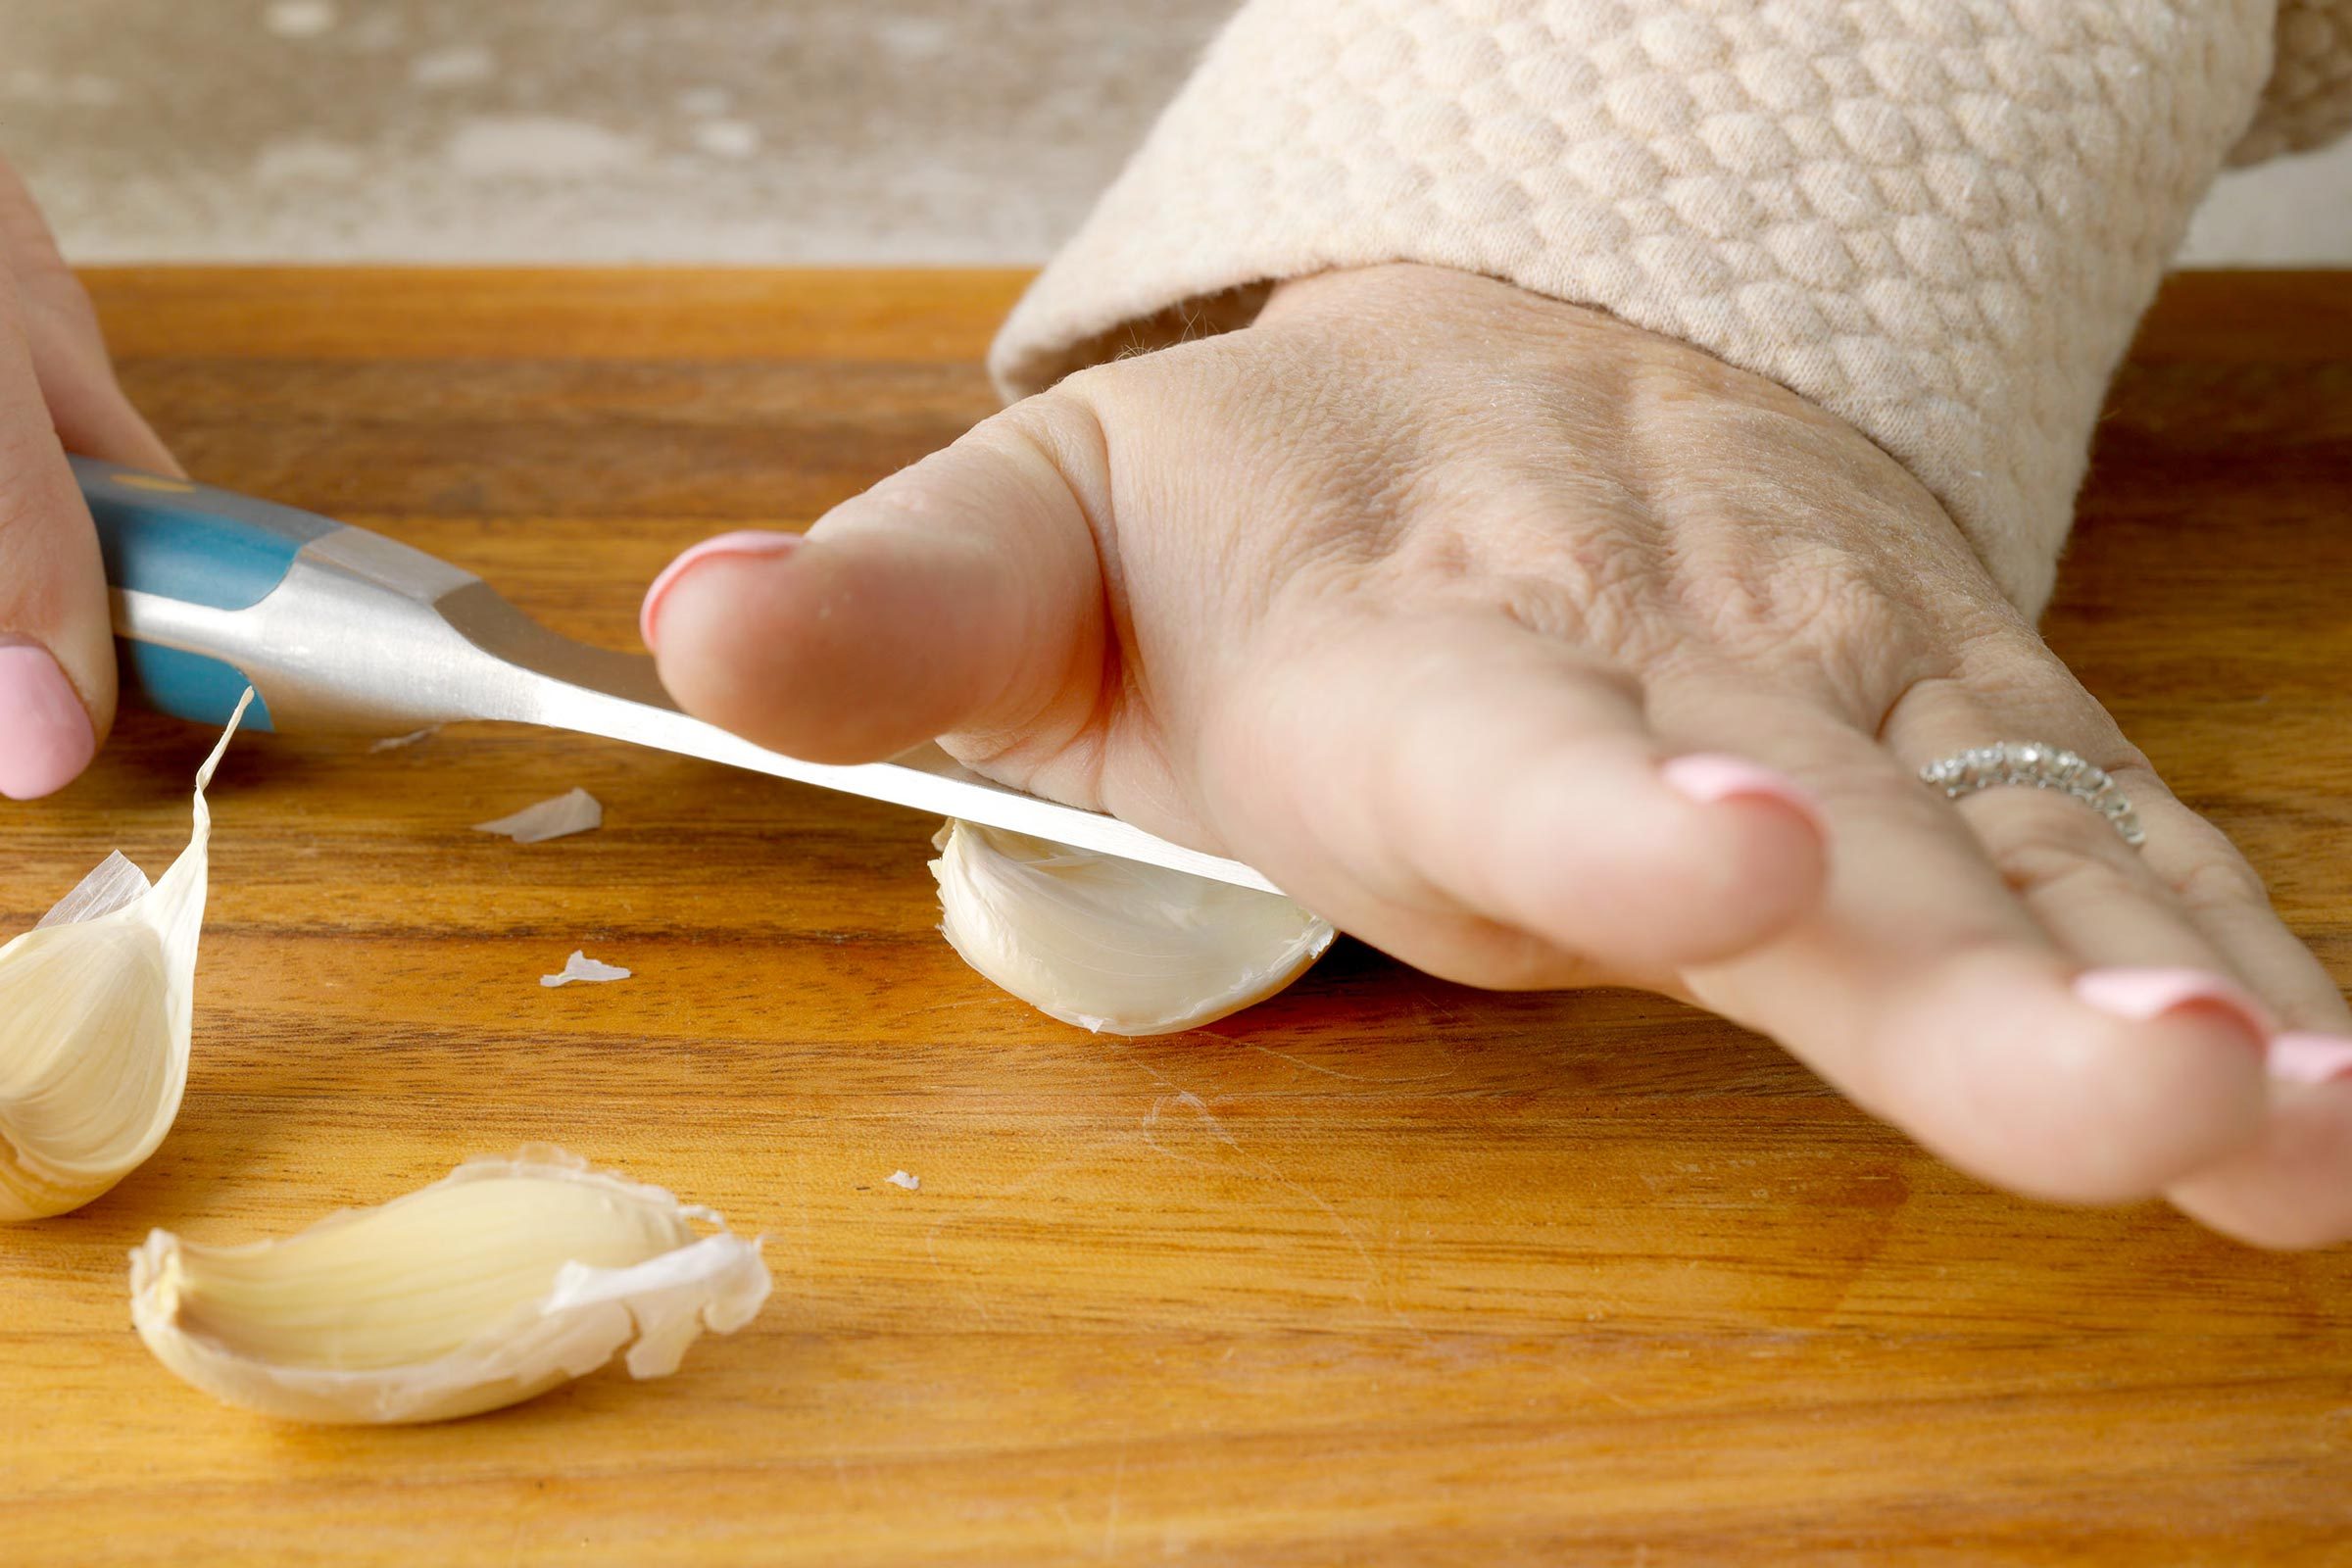 How To Peel Garlic (3 Fast & Easy Methods) 